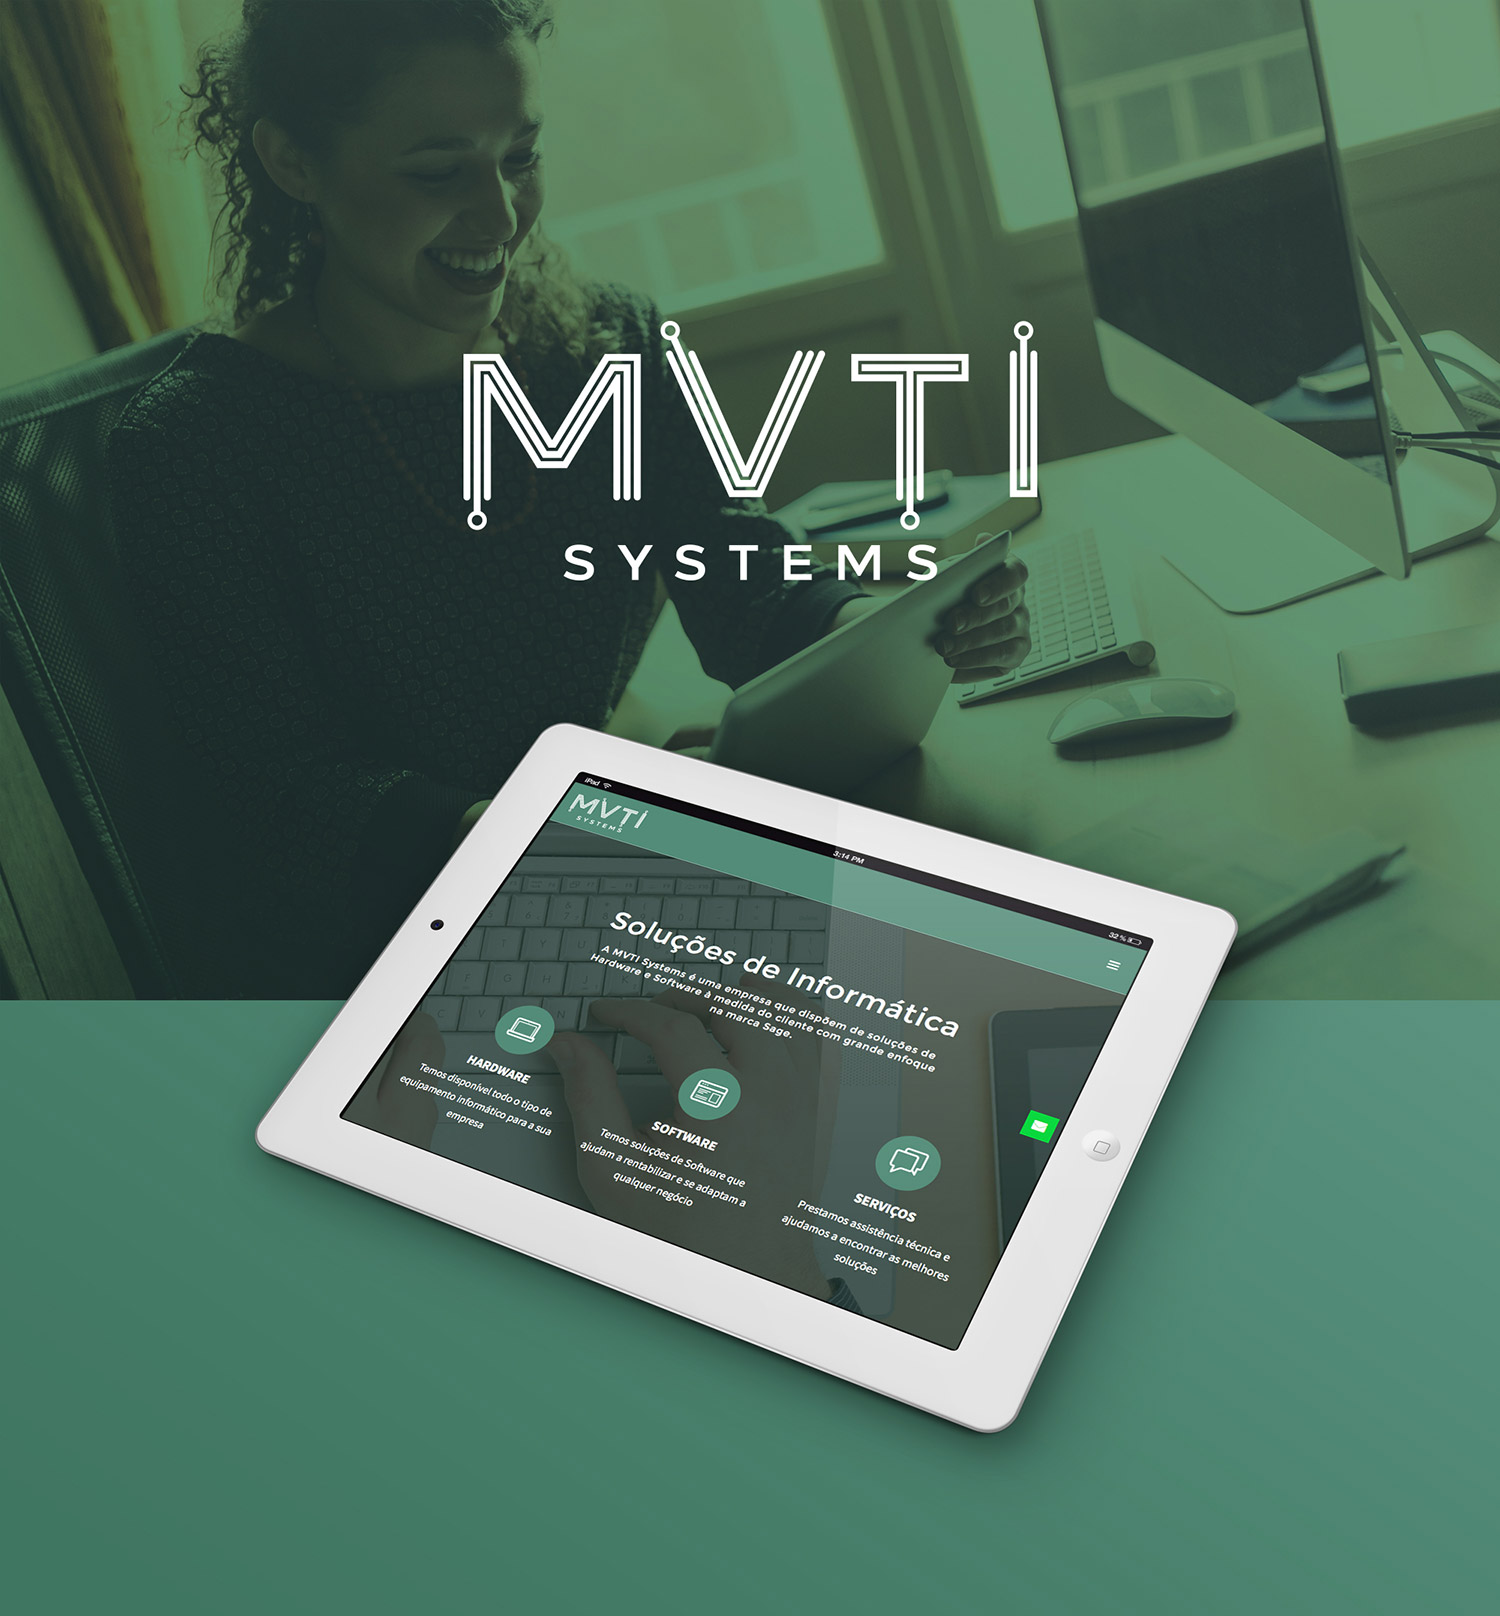 MVTI Systems